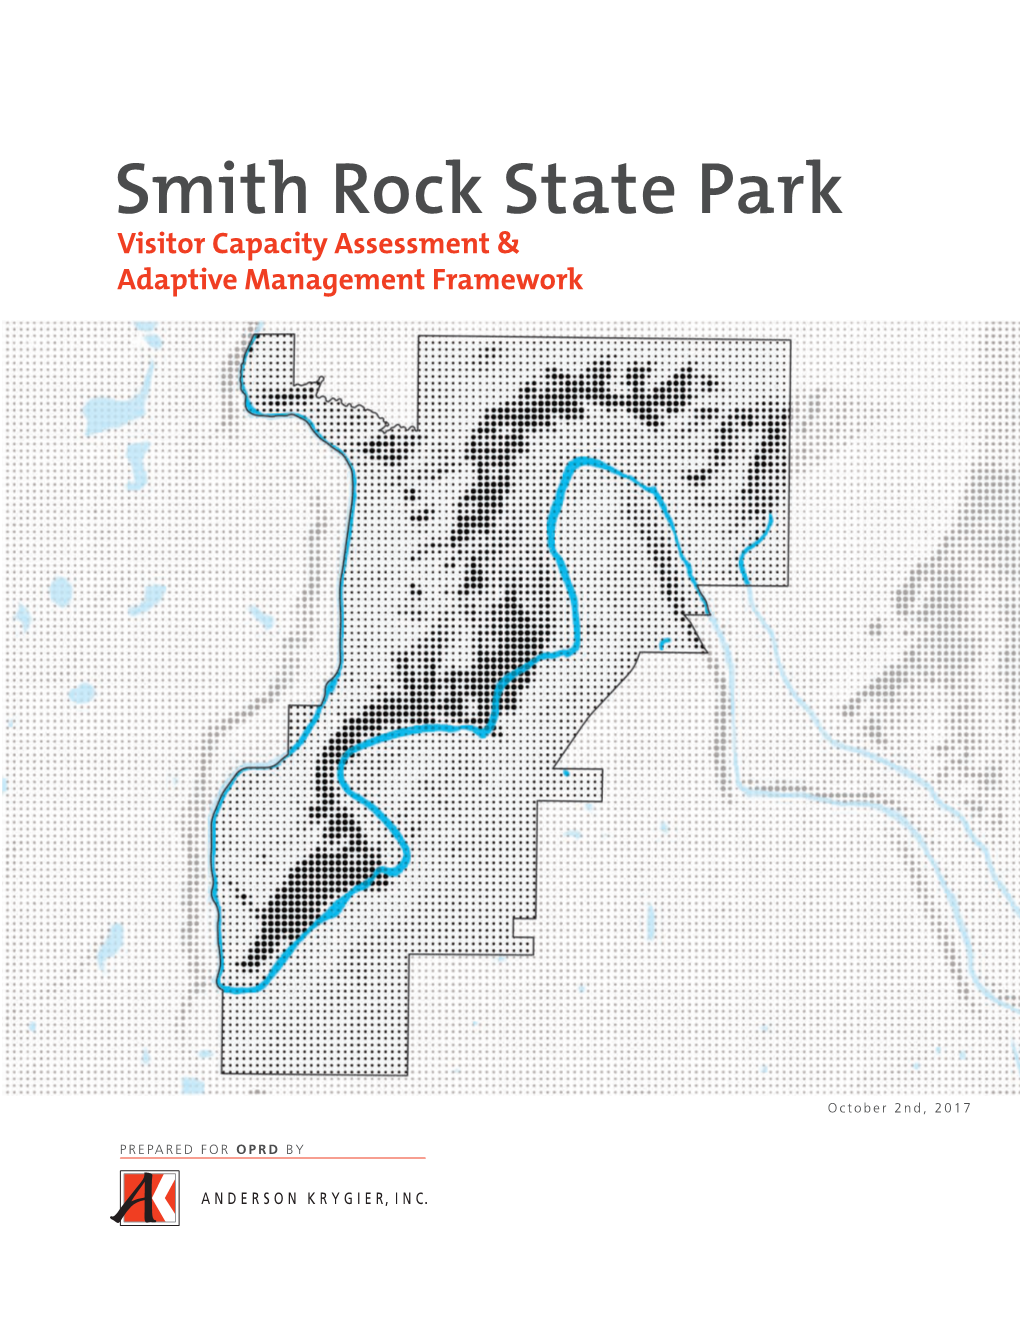 Smith Rock State Park Visitor Capacity Assessment & Adaptive Management Framework